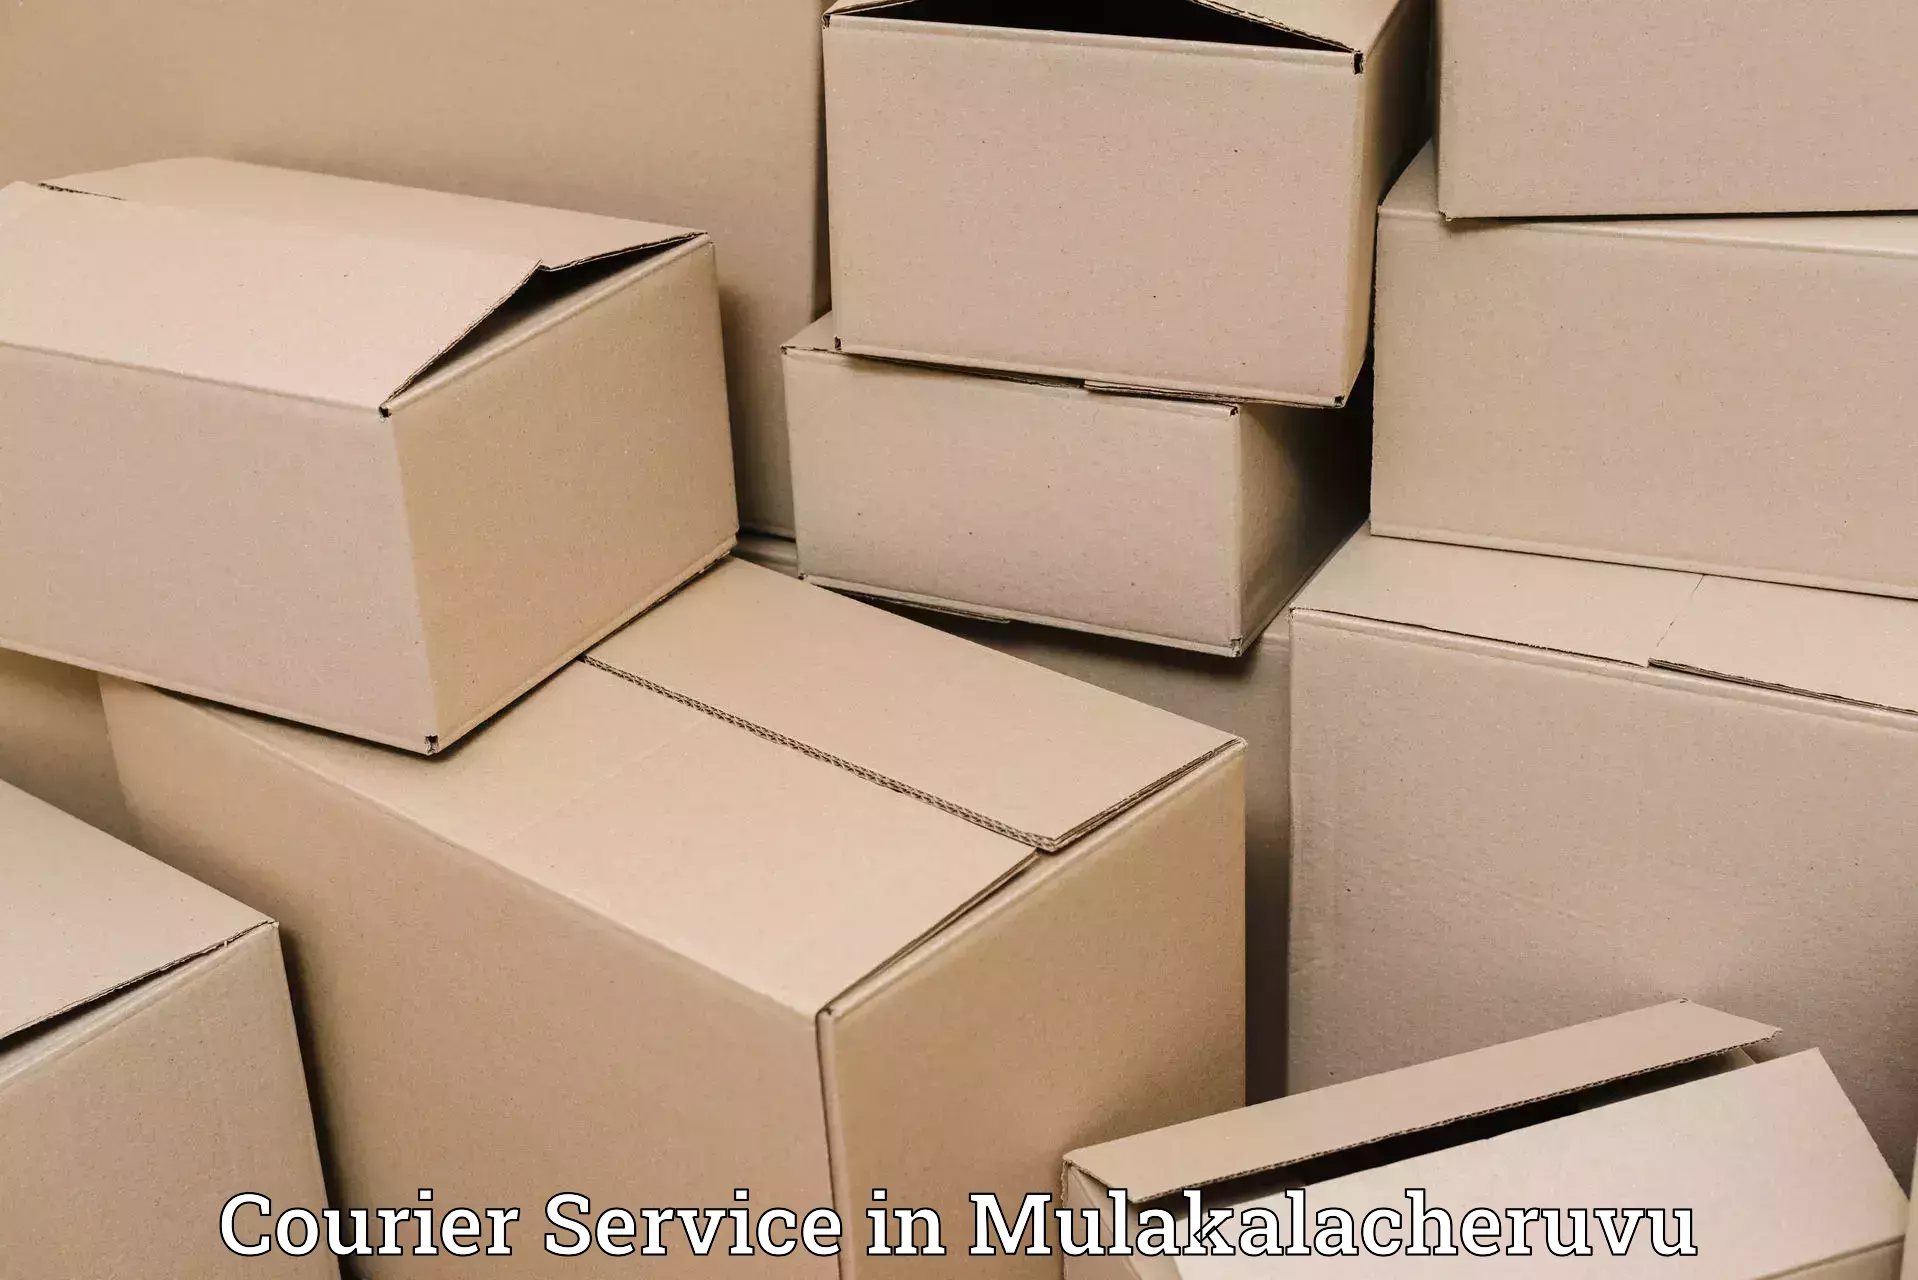 Flexible shipping options in Mulakalacheruvu